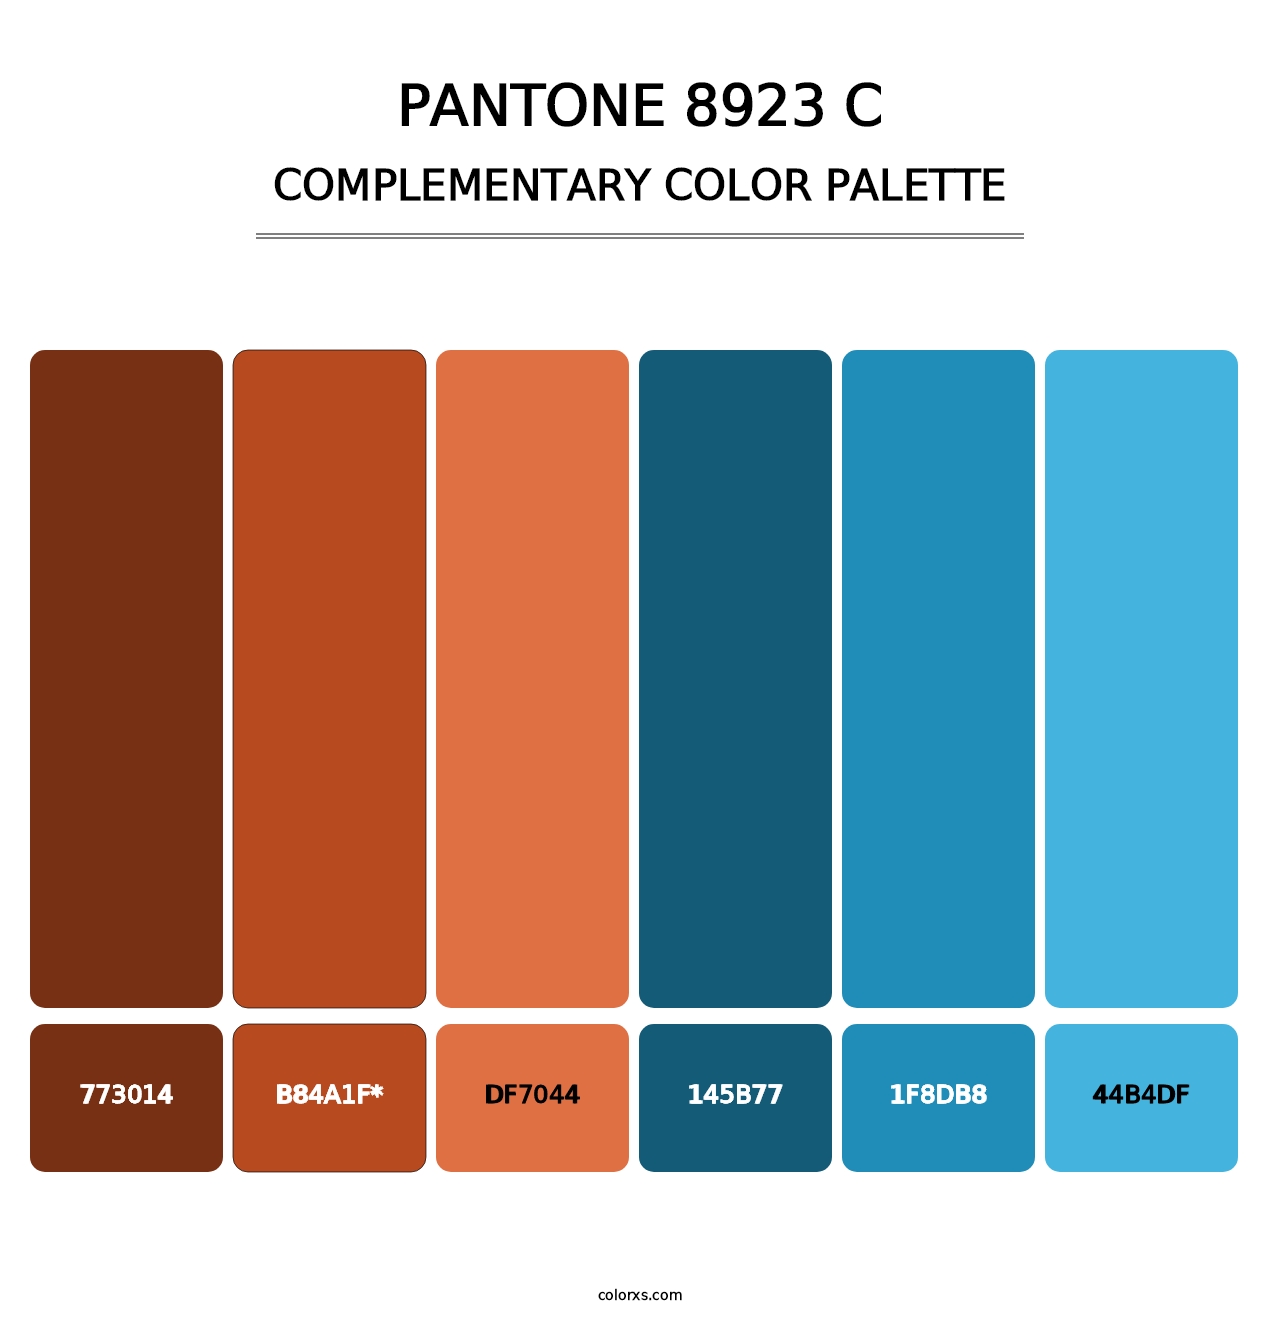 PANTONE 8923 C - Complementary Color Palette